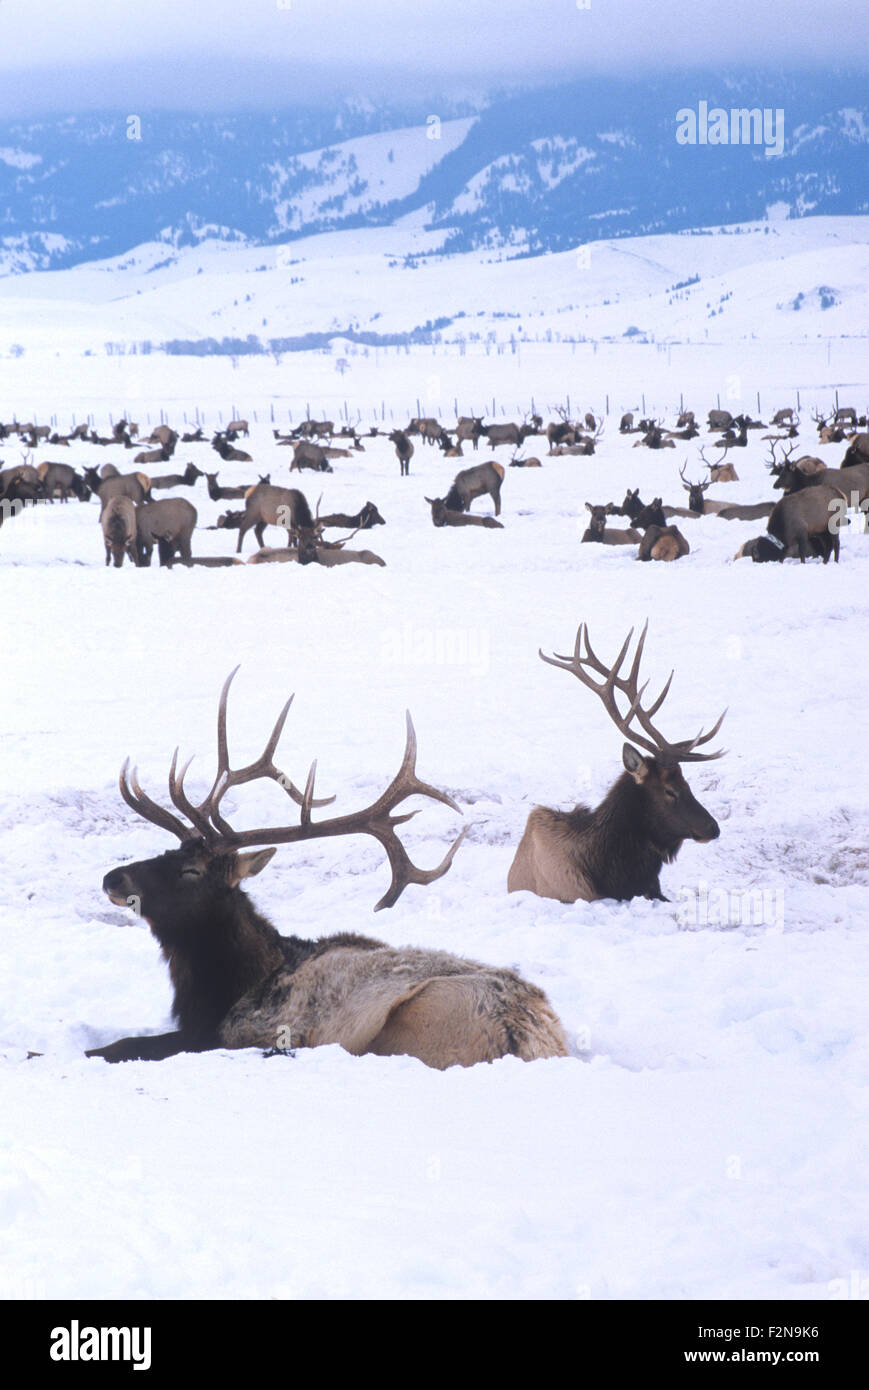 The National Elk Refuge provides a winter feeding ground for nearly 10,000 elk, Jackson Hole, Wyoming. Stock Photo